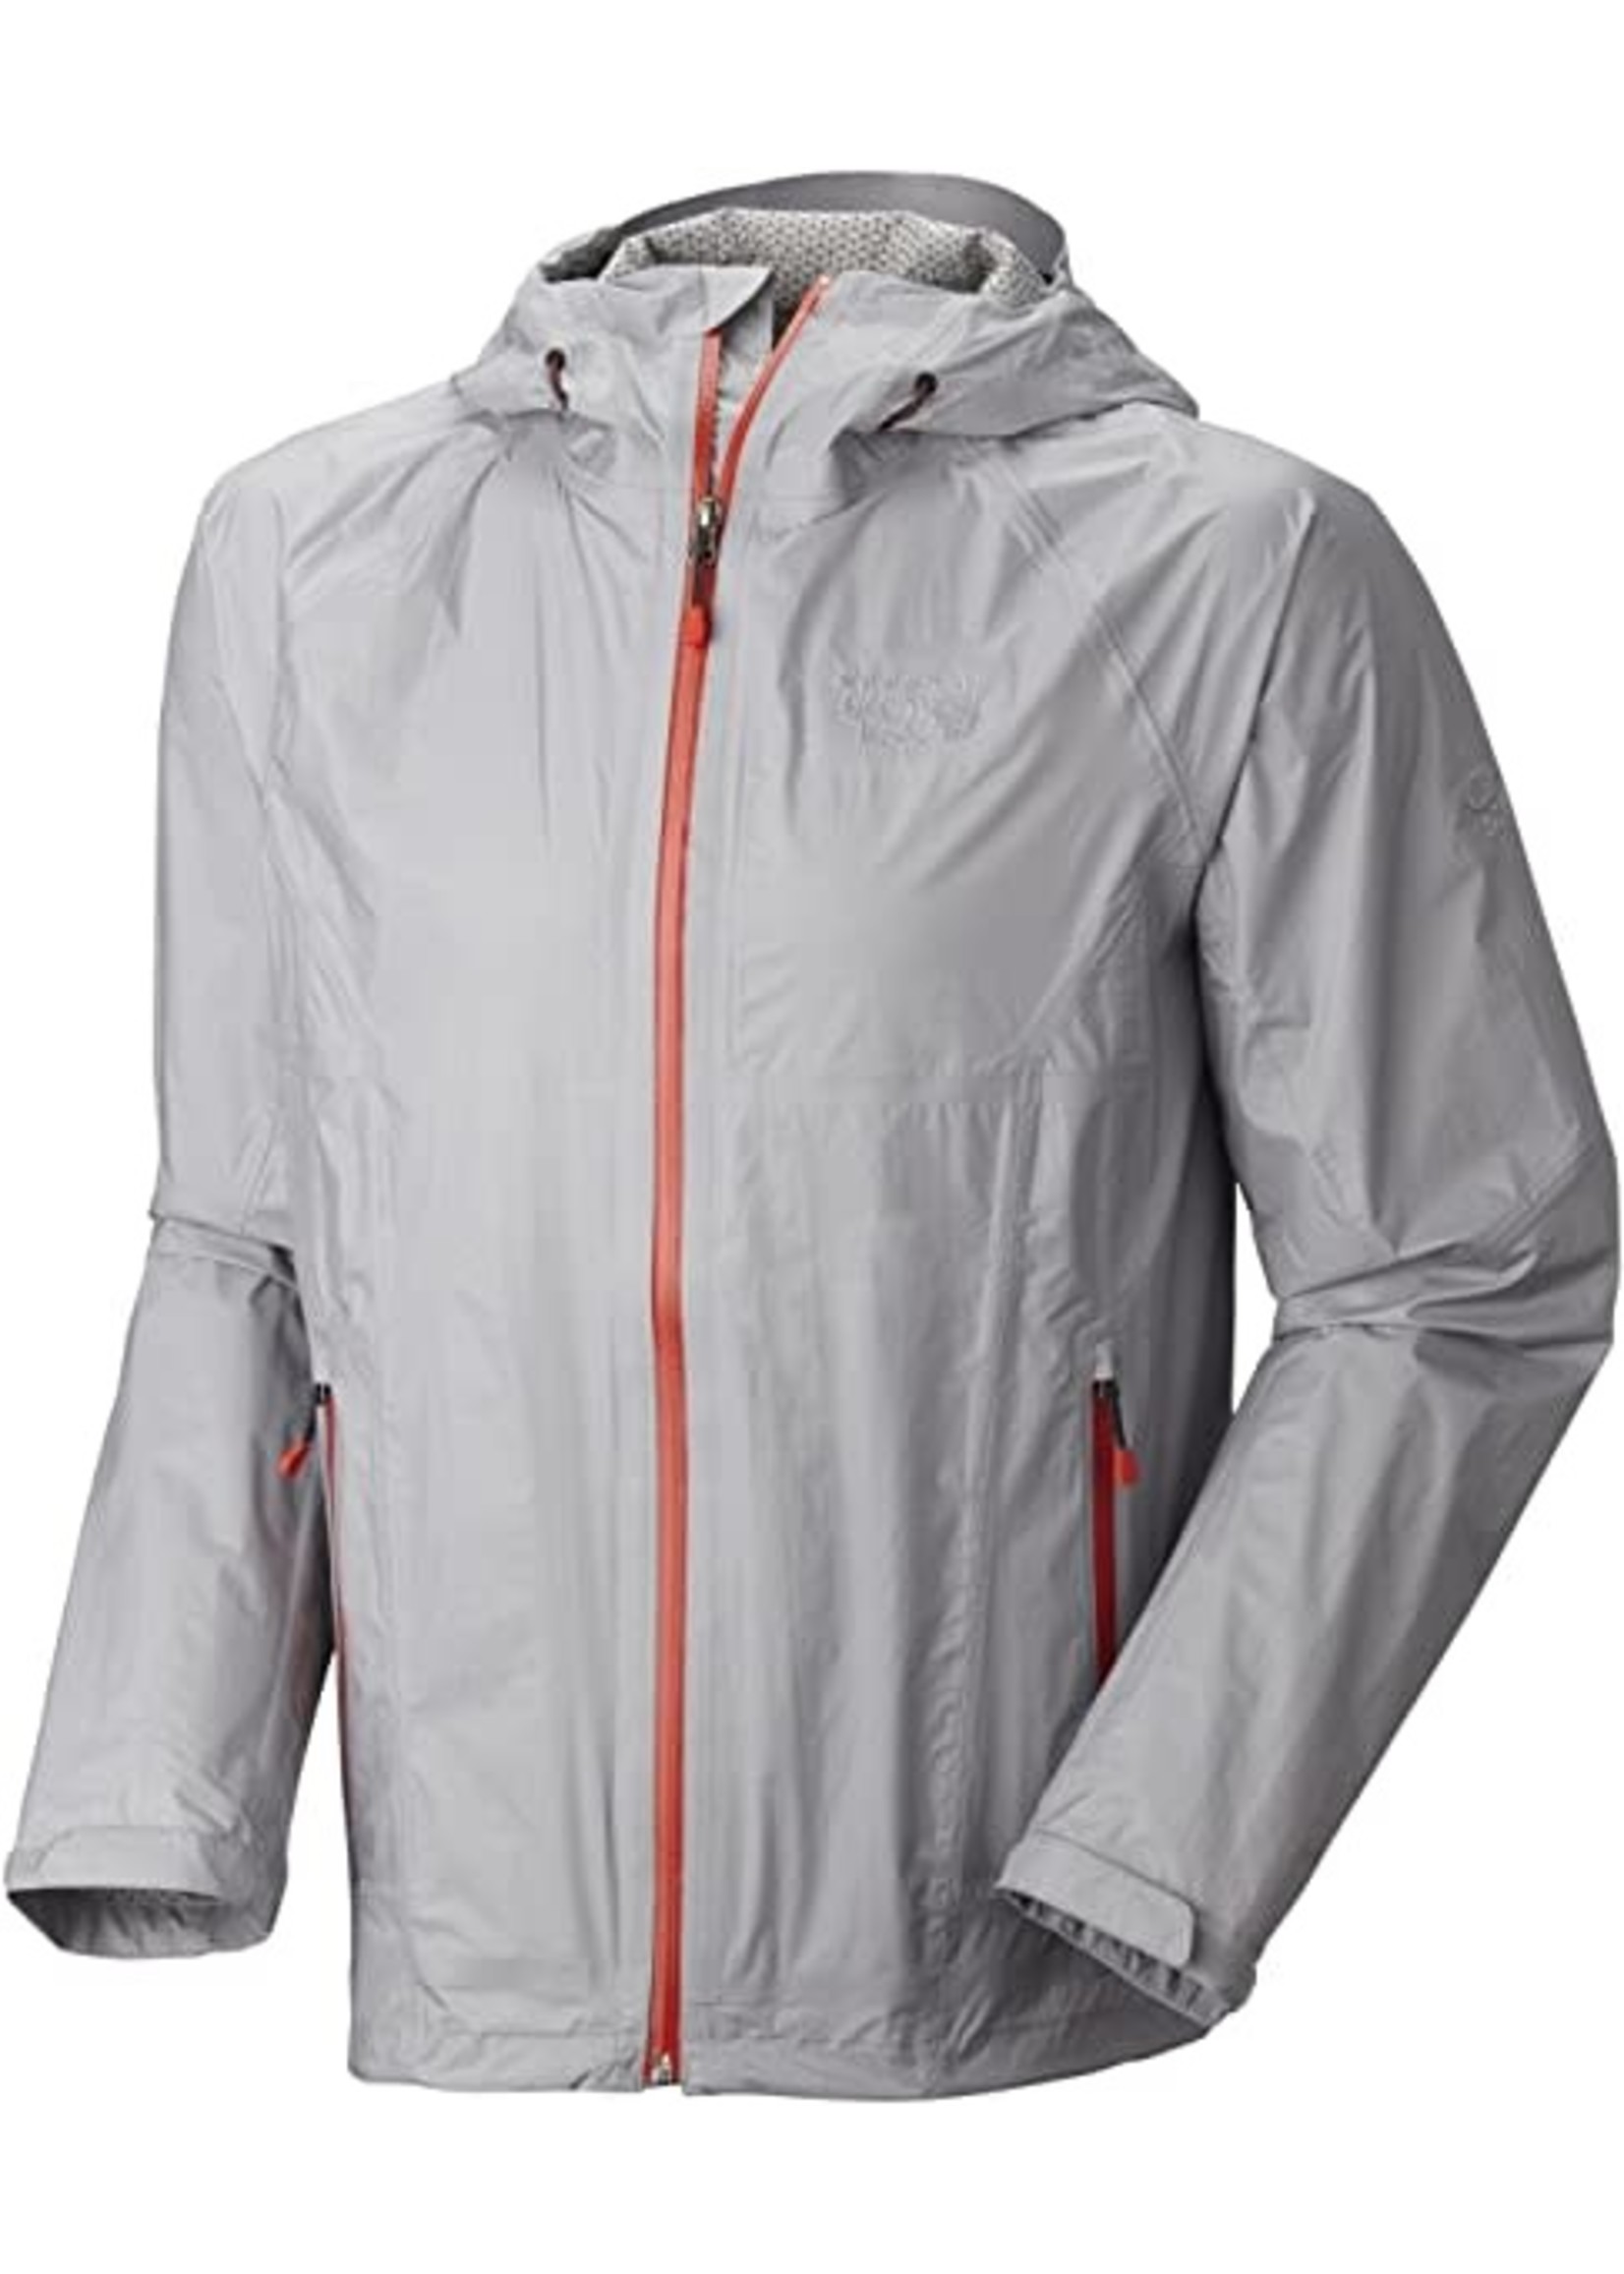 Mountain Hardwear Manteau Capacitor Jacket pour hommes